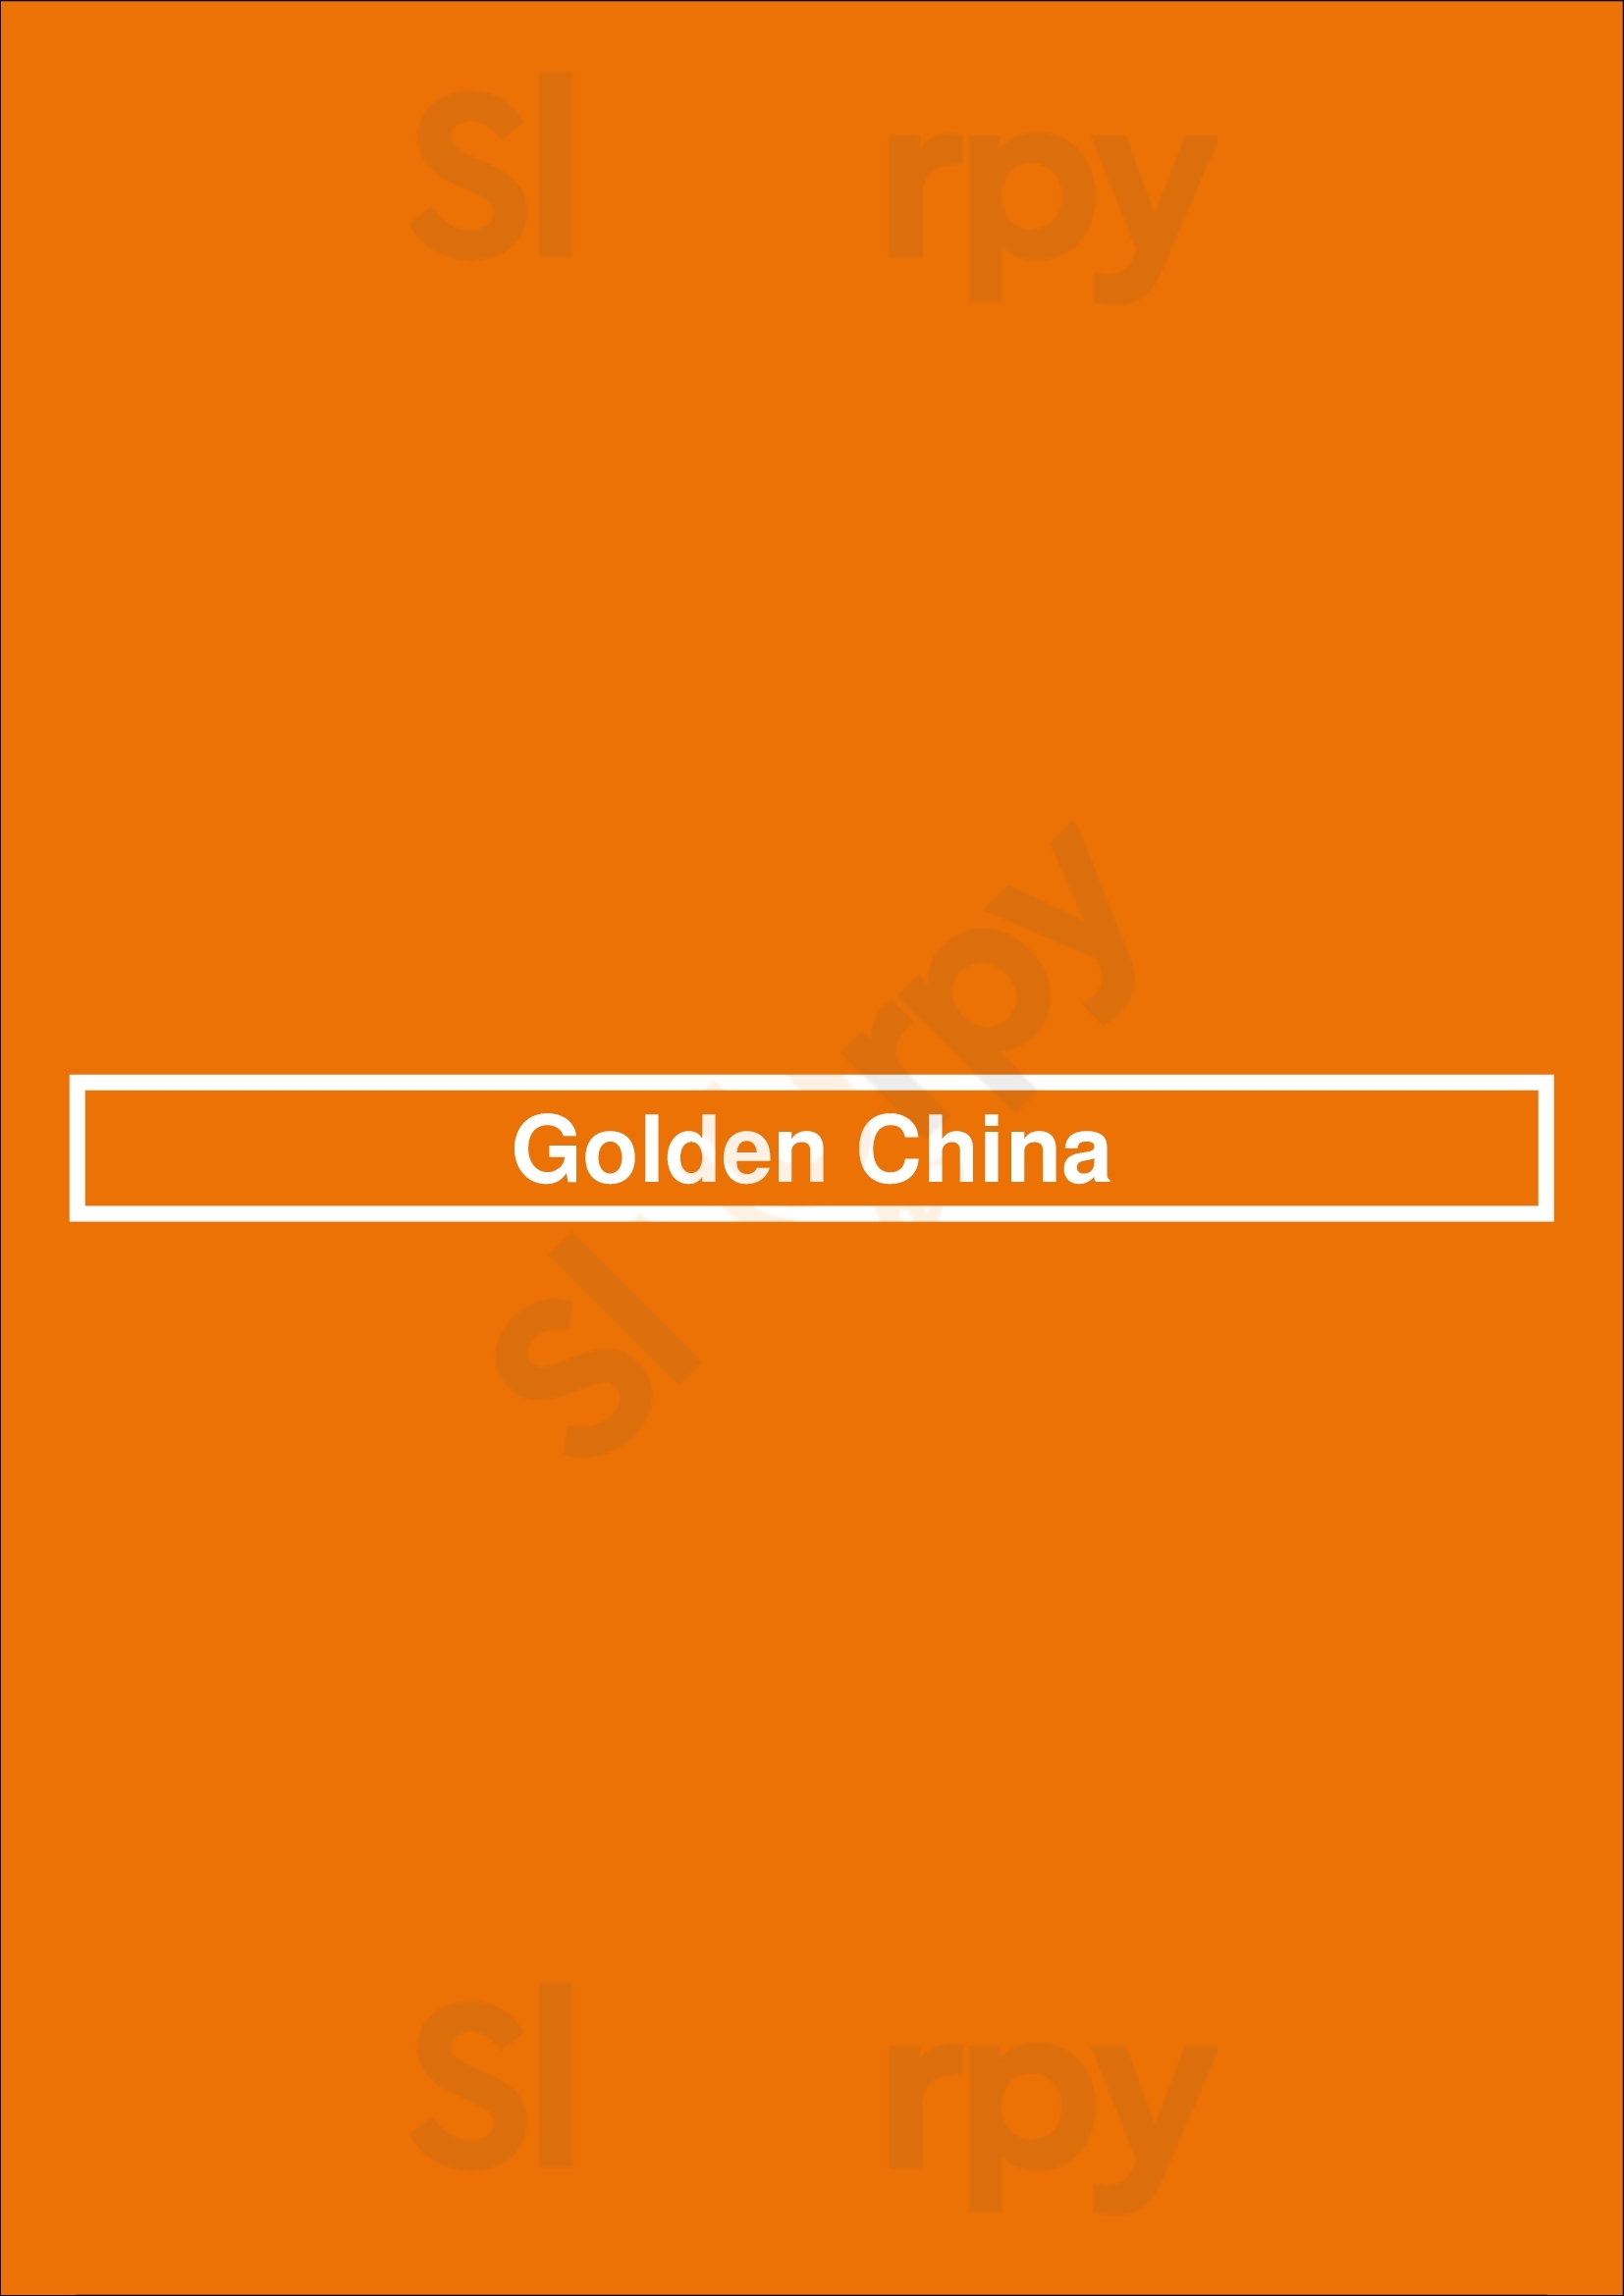 Golden China Las Vegas Menu - 1